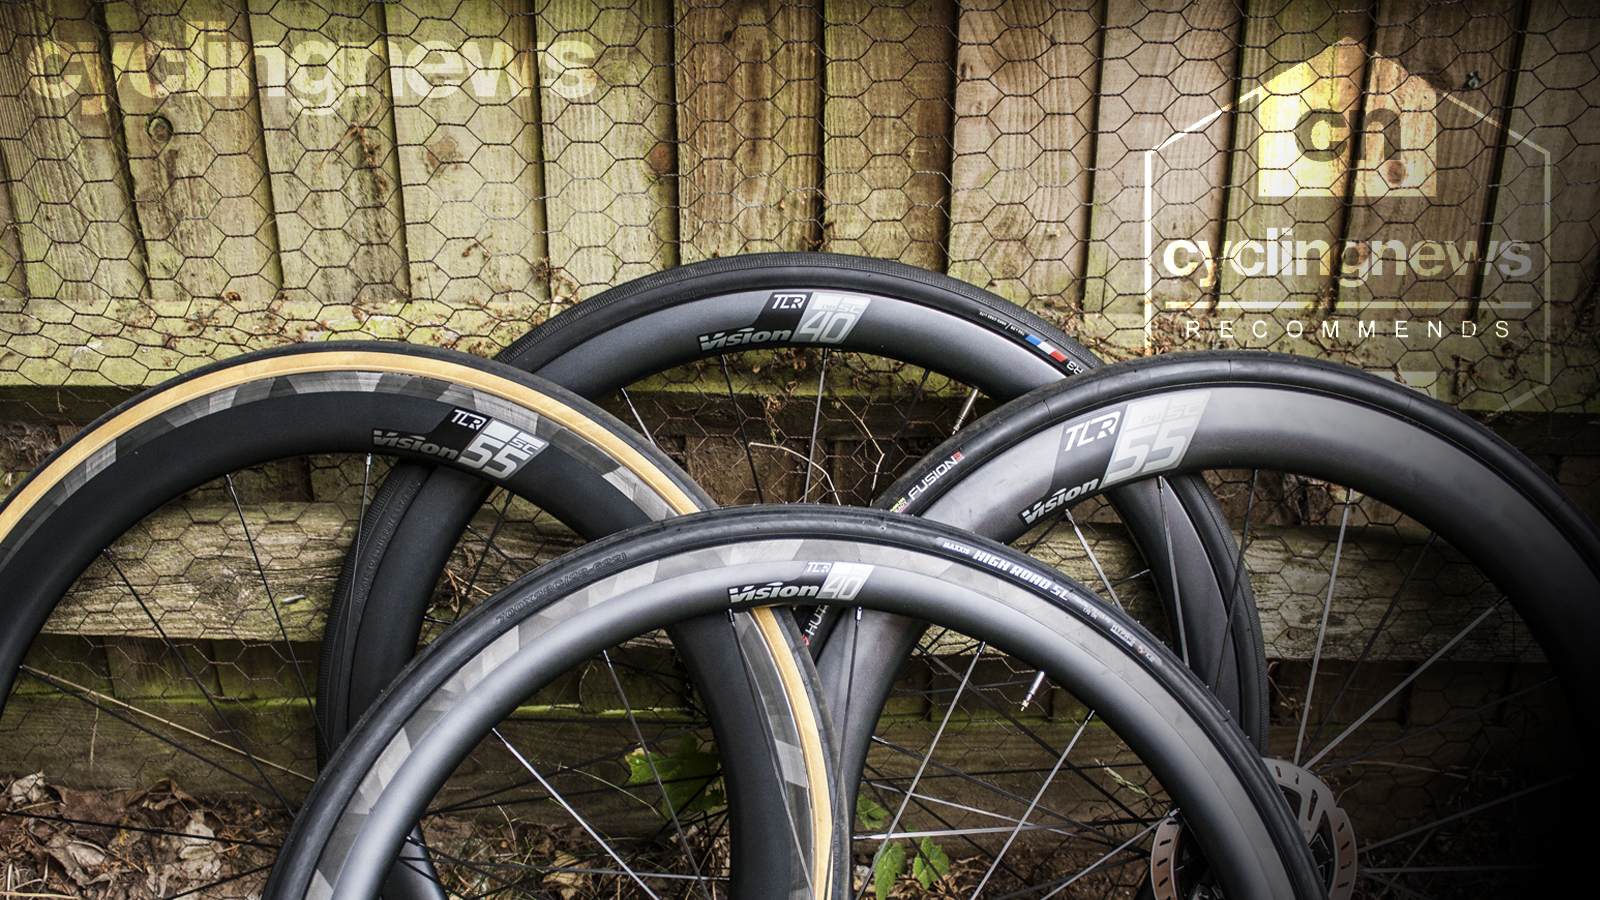 Vision SC wheel range - ridden and reviewed | Cyclingnews